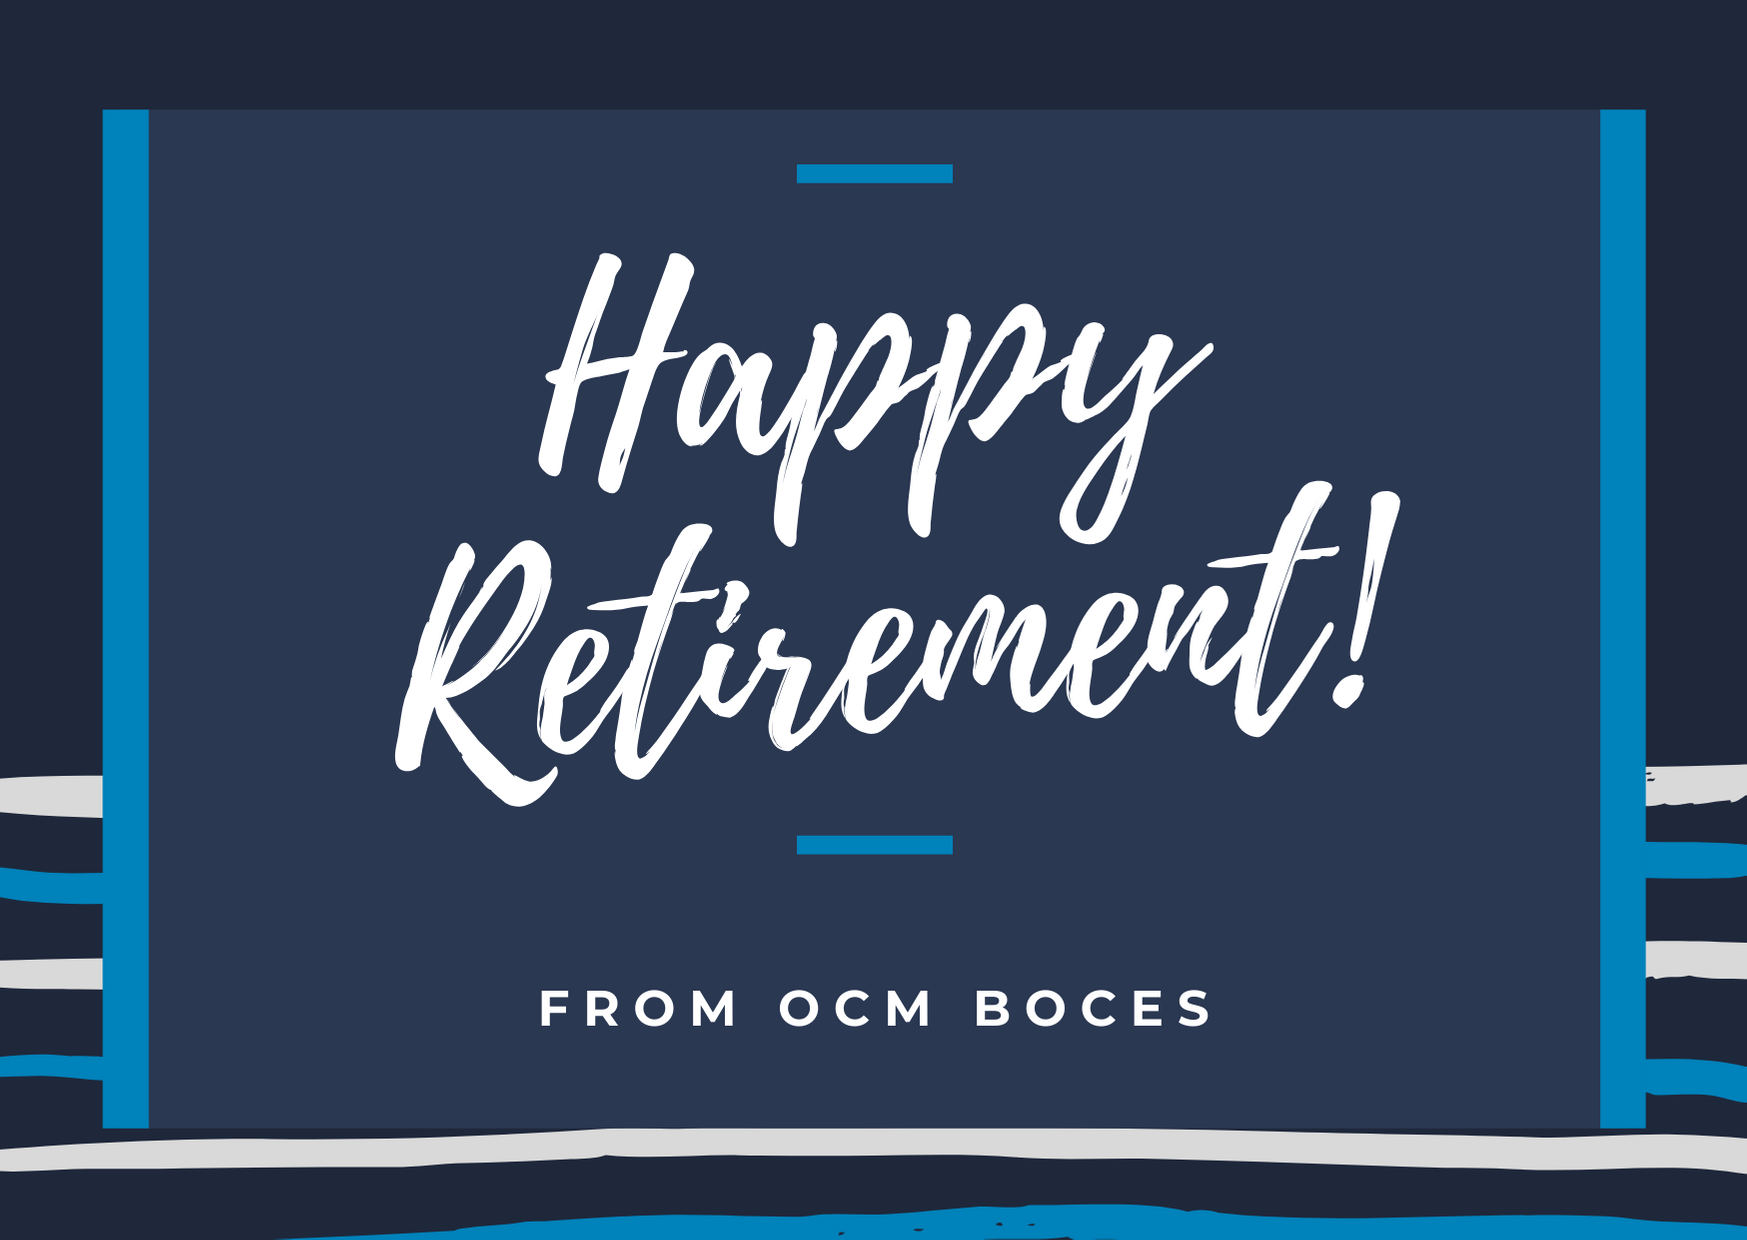 Happy Retirement! From OCM BOCES